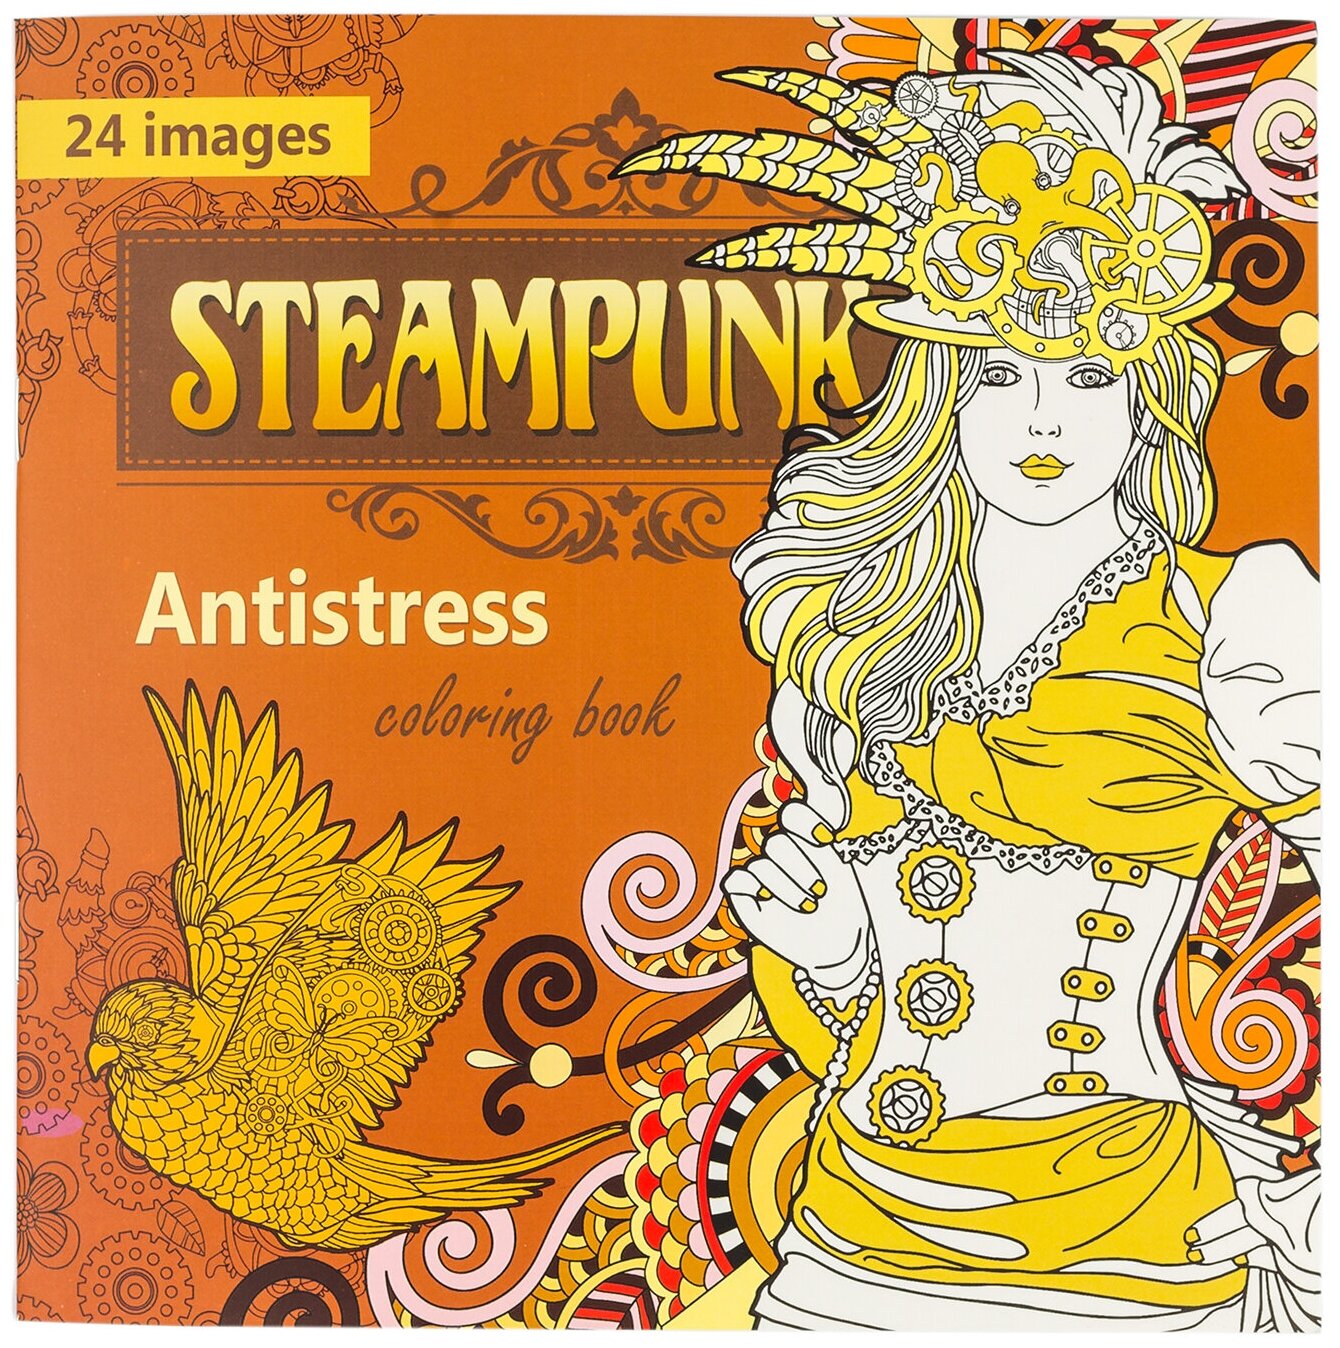 Great anti-stress coloring book